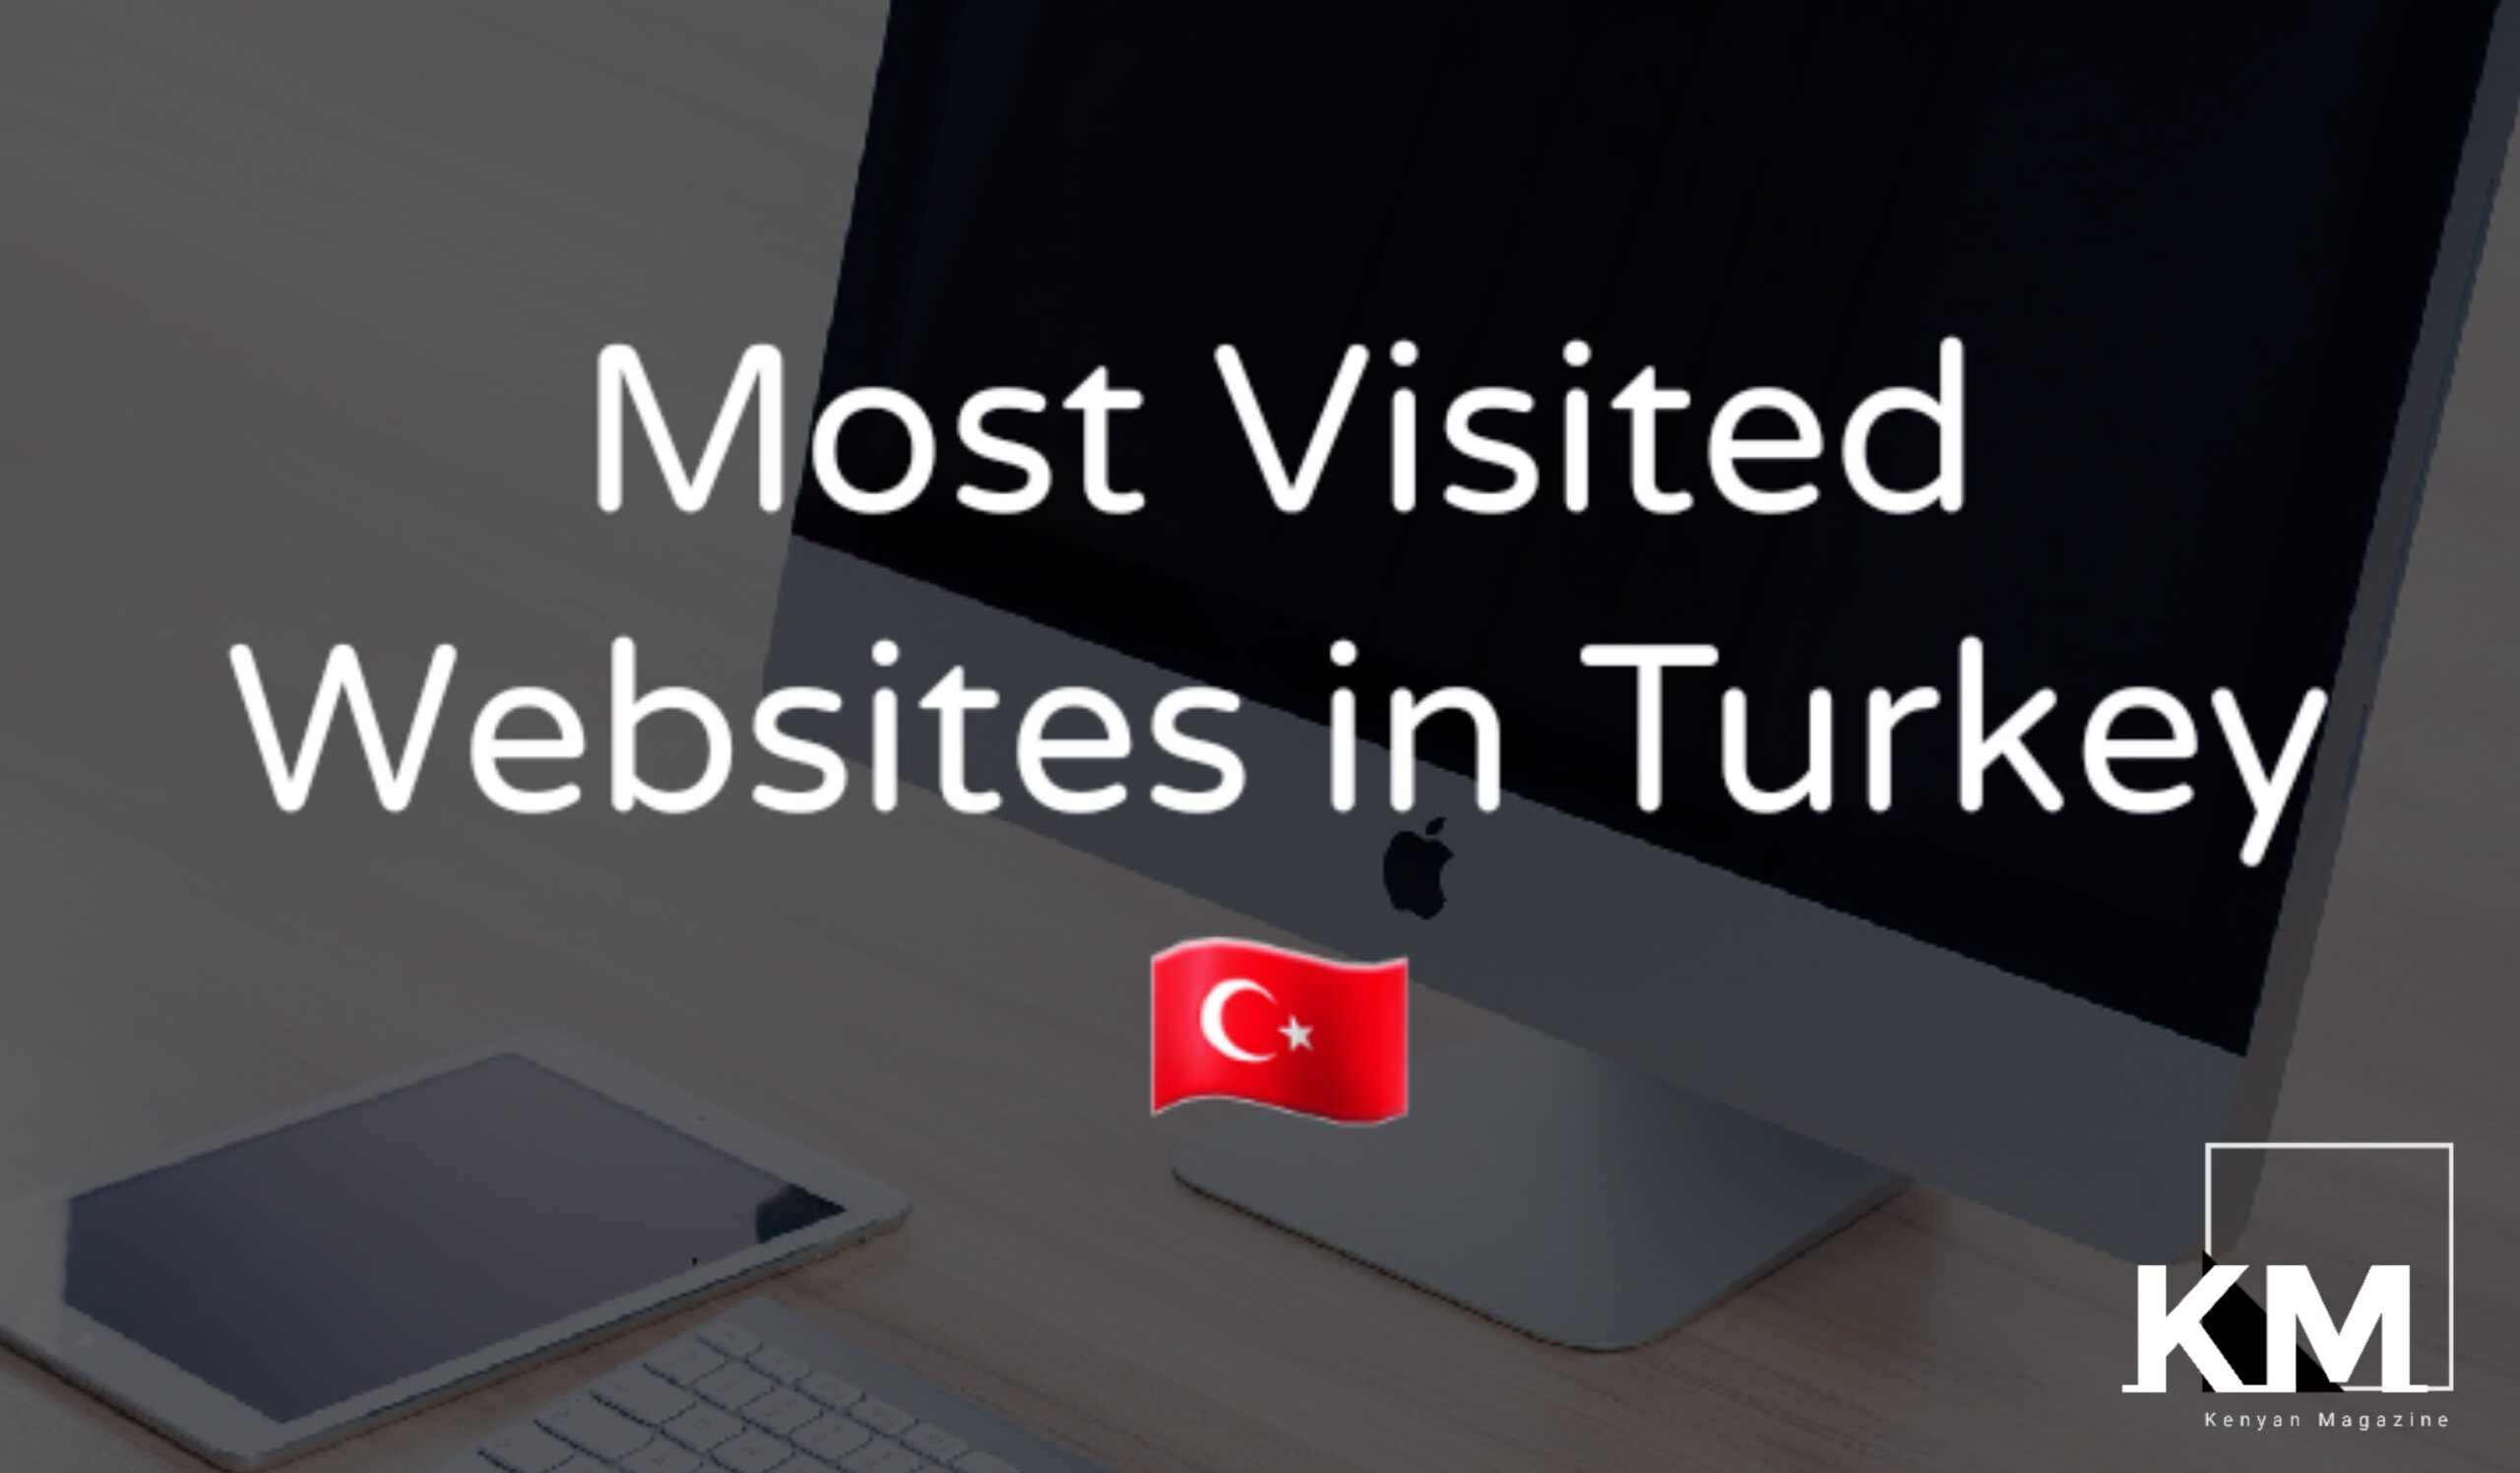 Most visited websites in Turkey